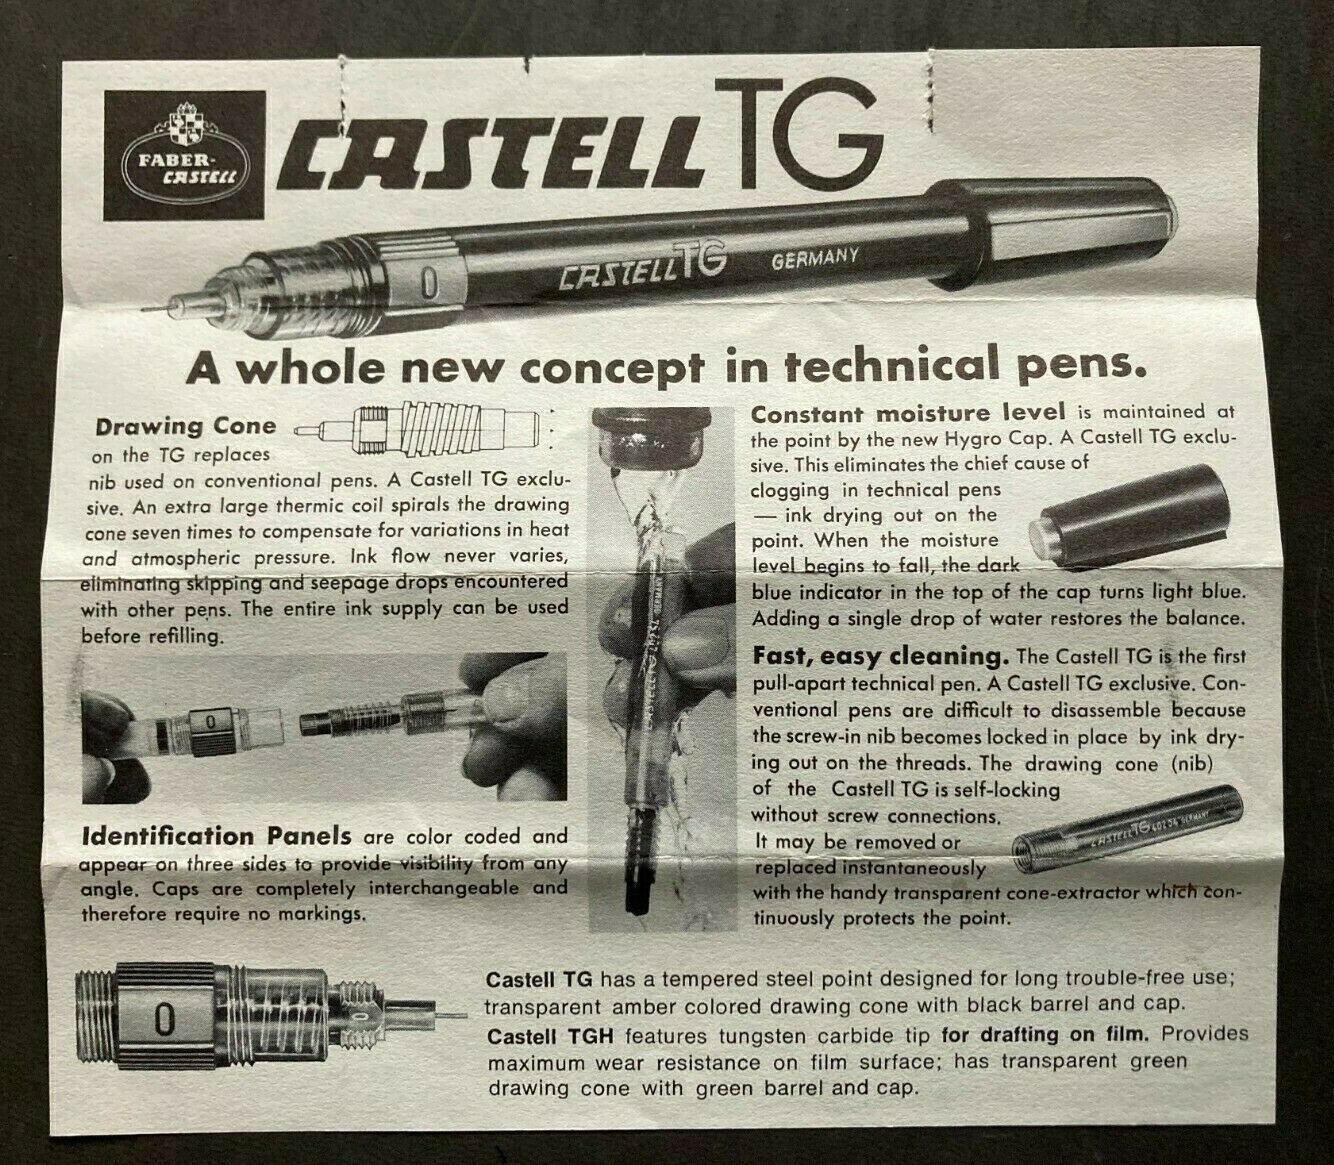 Original Faber-castell Tg Product Description "new Concept In Technical Pens"